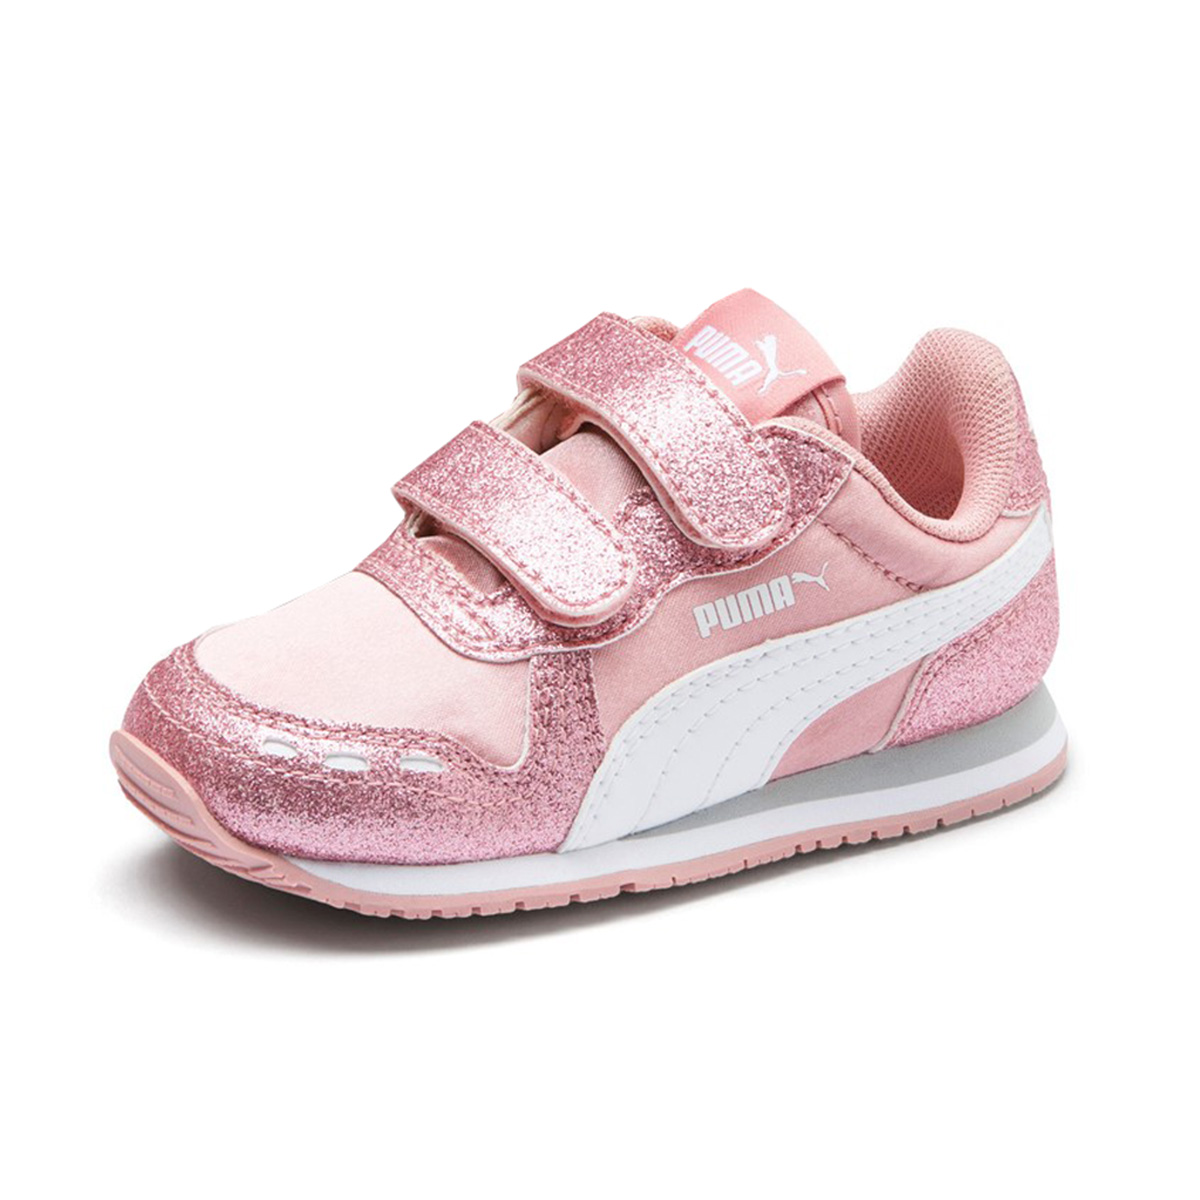 PUMA Cabana Racer Glitz V PS Inf Sneaker Schuhe Baby Mädchen Rosa 370986 02